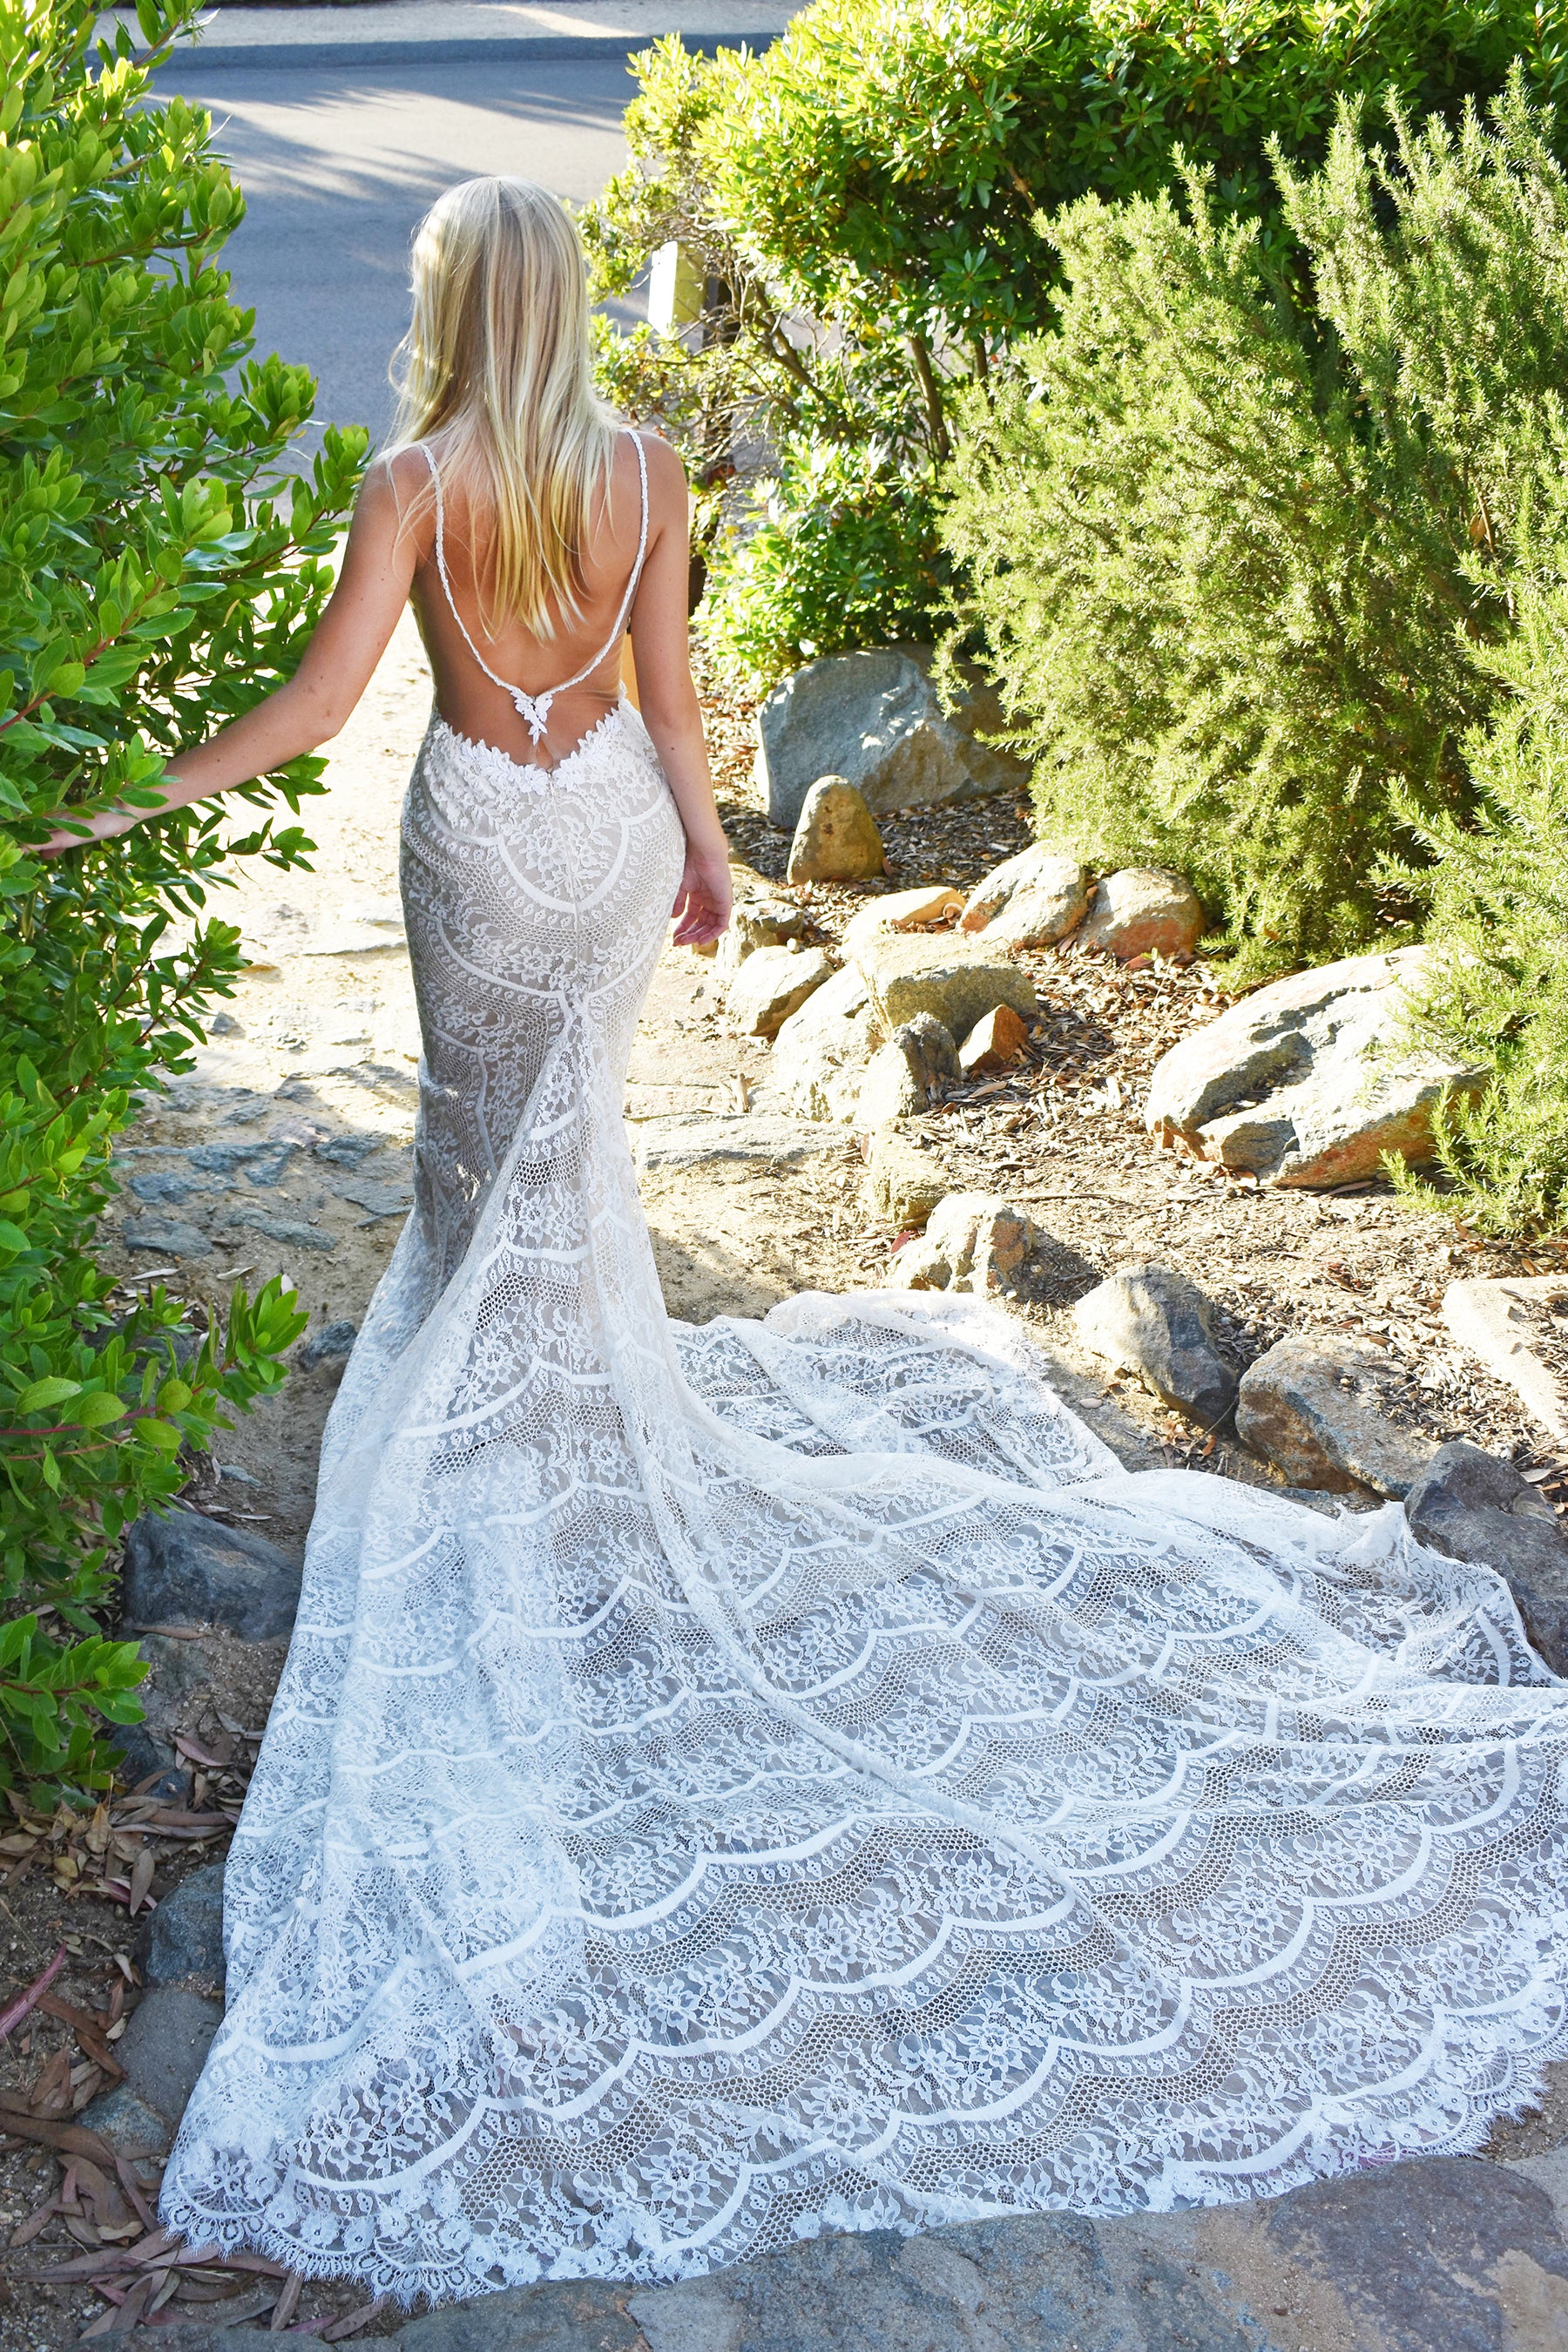 Santorini bridal gown by rene atelier